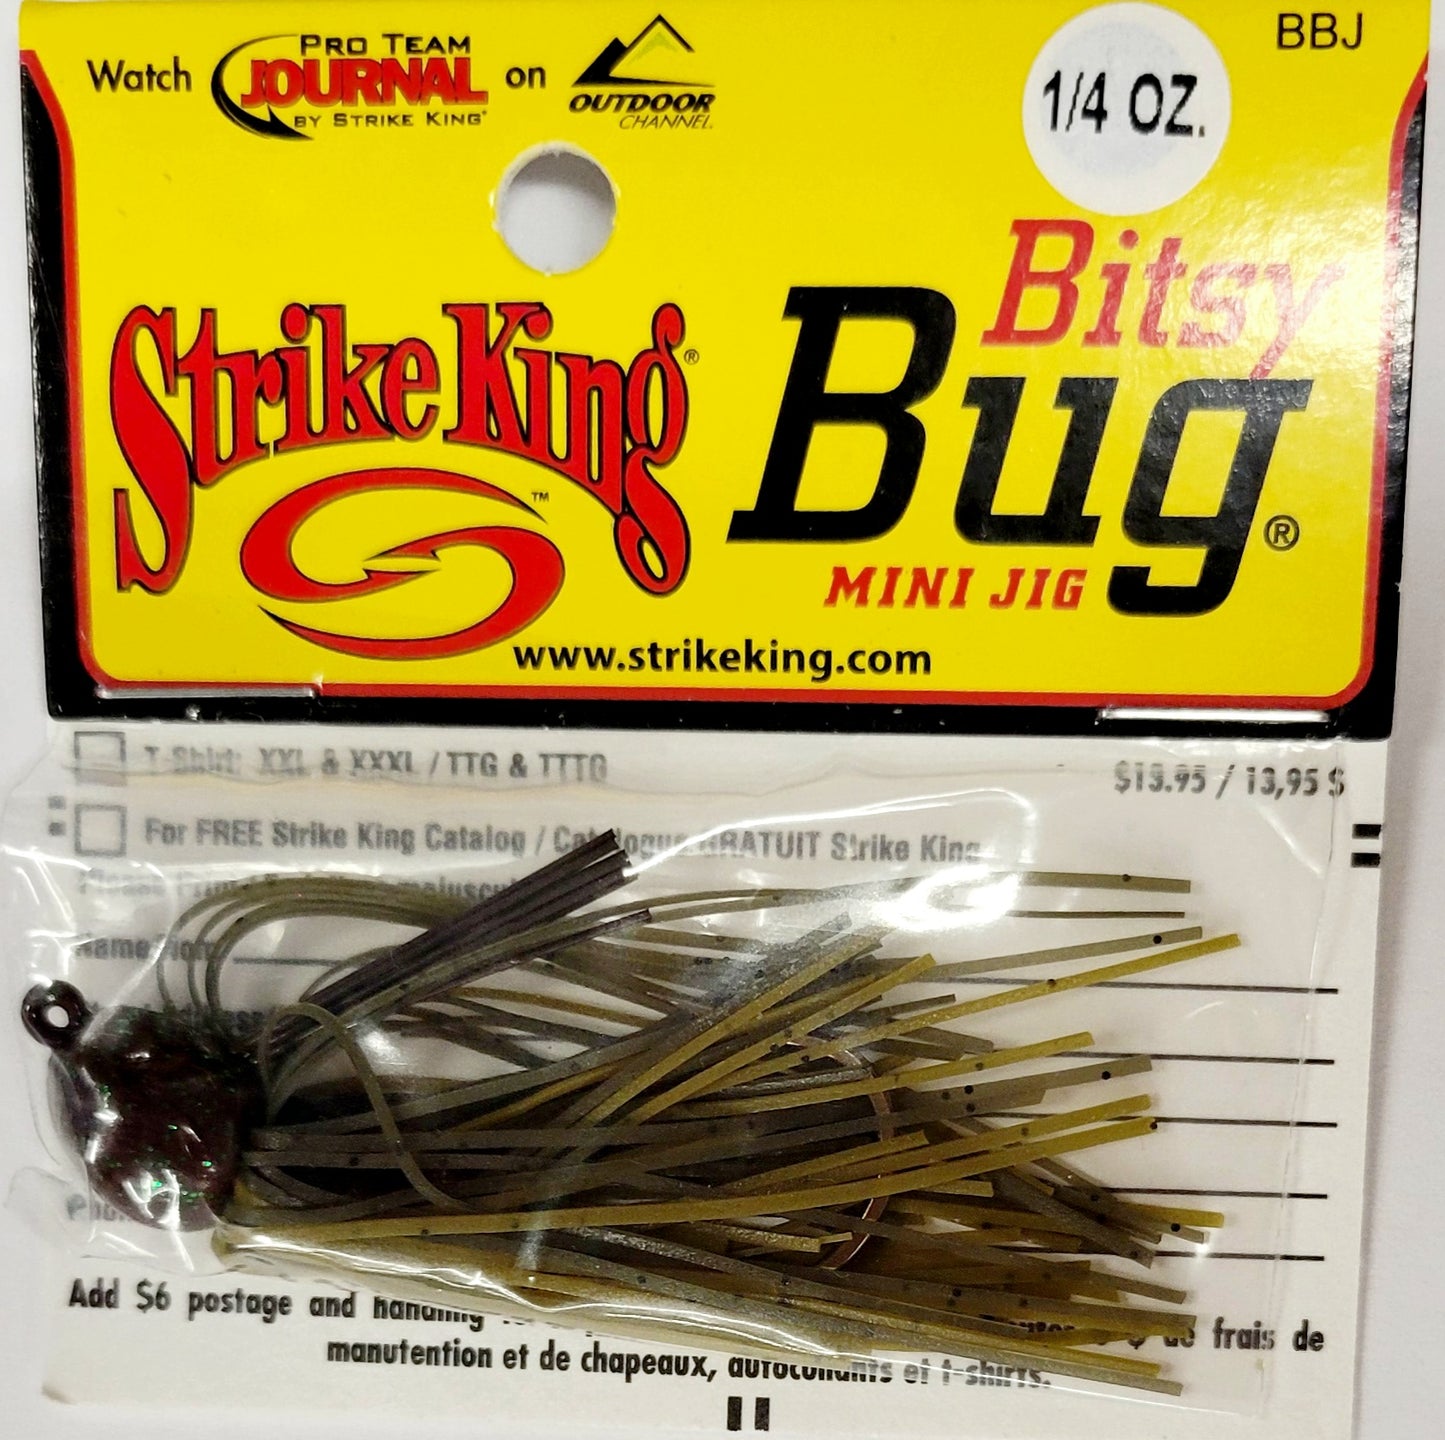 Strike King Bitsy Bug Mini Jig